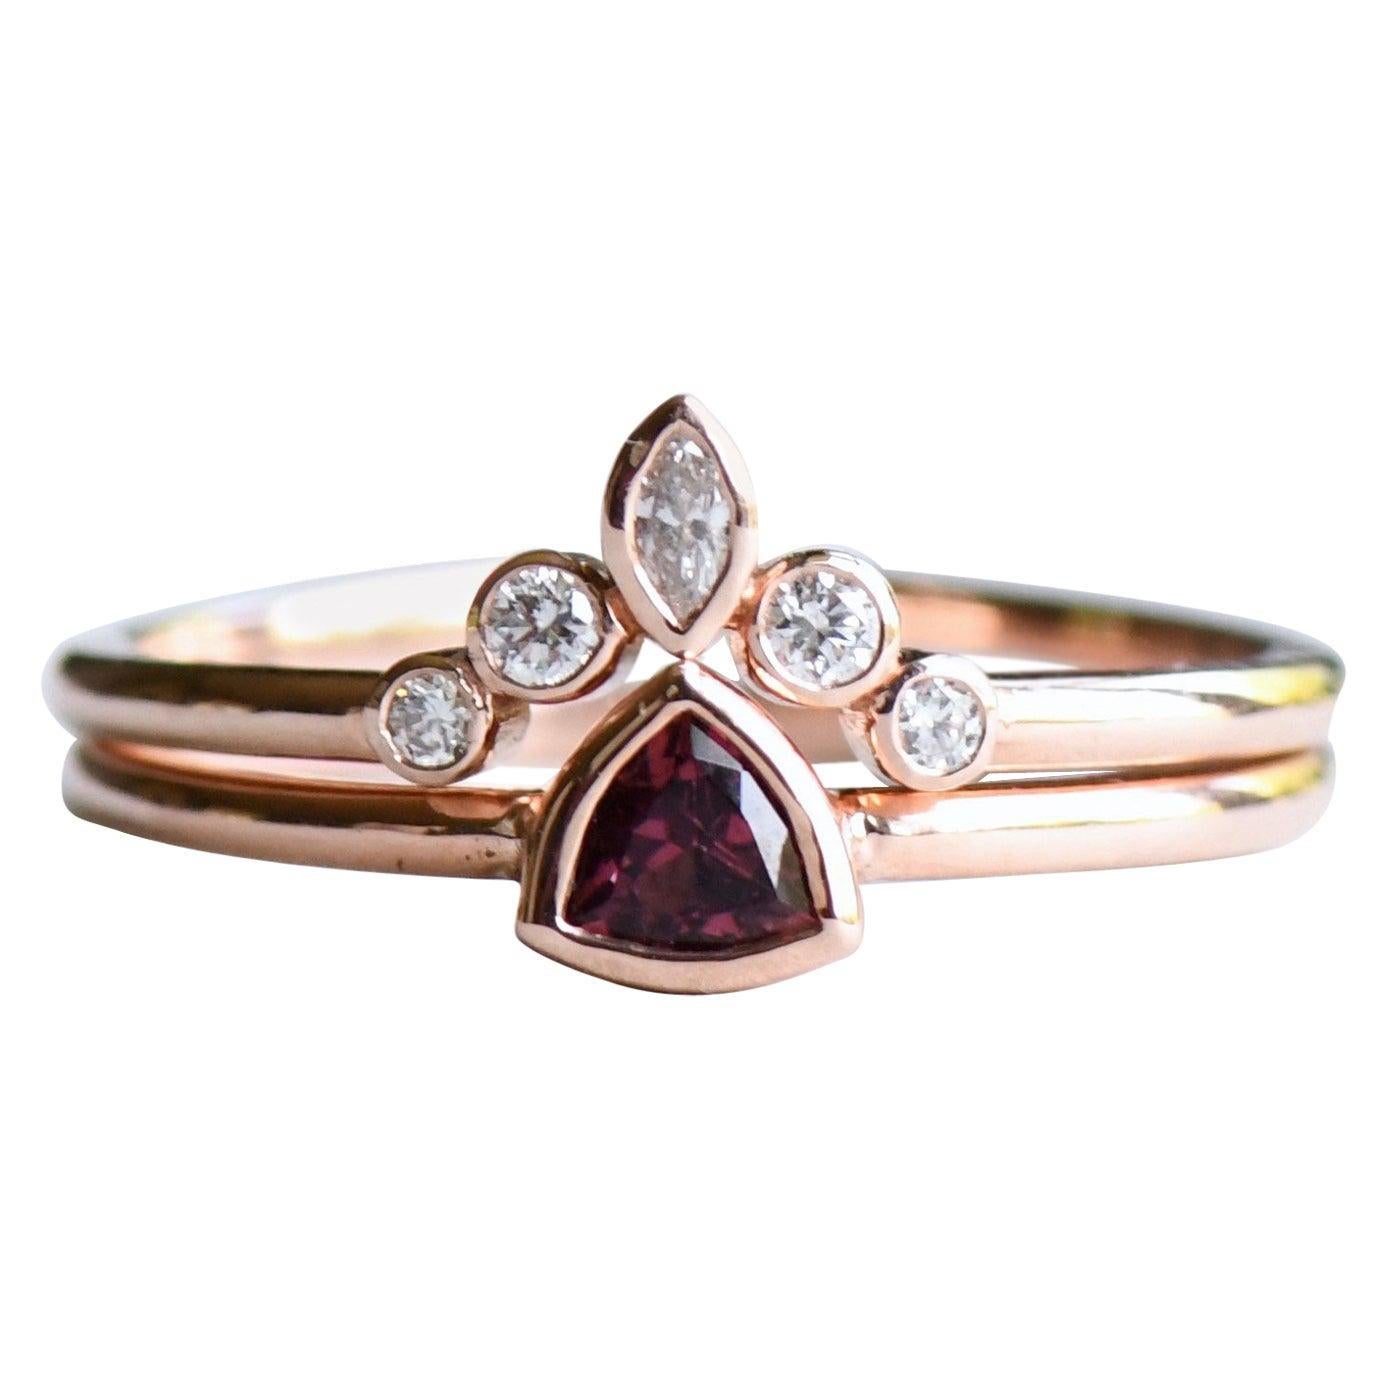 For Sale:  Pink Tourmaline Trillion Ring with Diamond Ring Guard, 14 Karat Rose Gold Ring